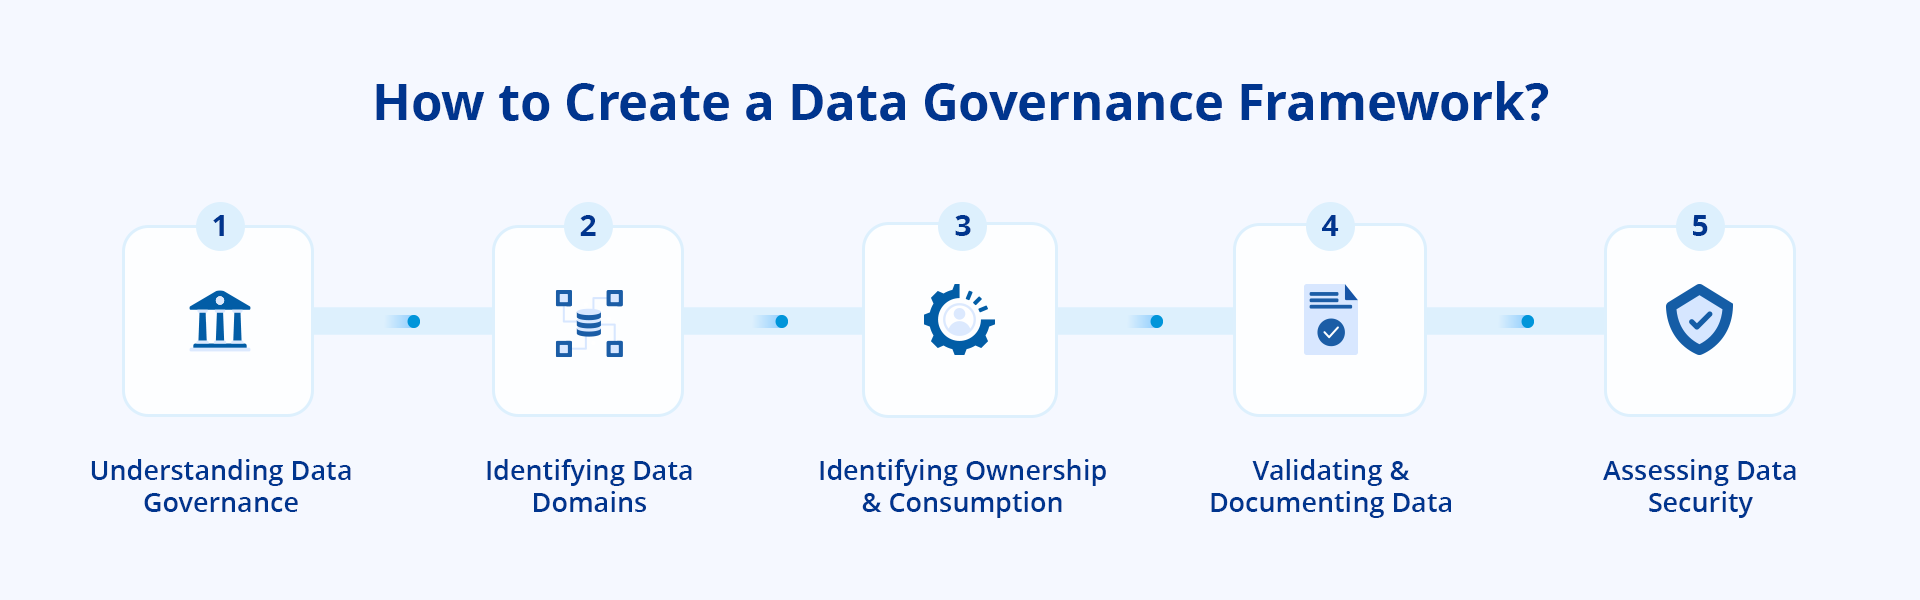 How to create a data governance framework